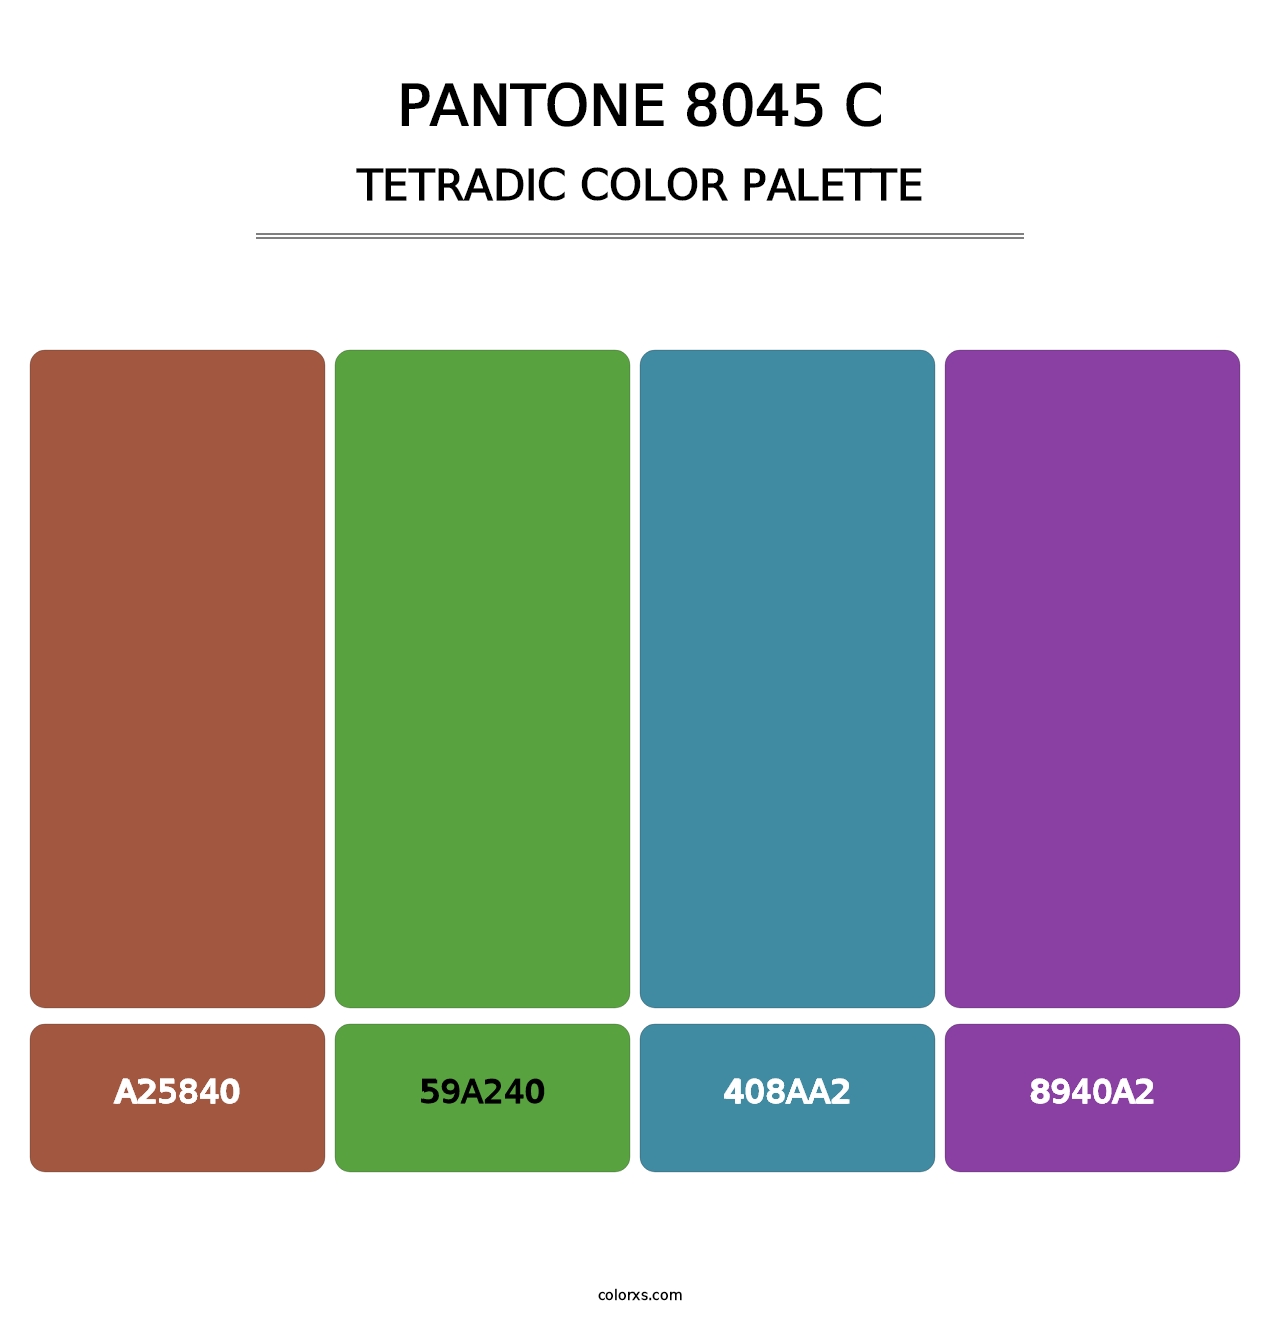 PANTONE 8045 C - Tetradic Color Palette